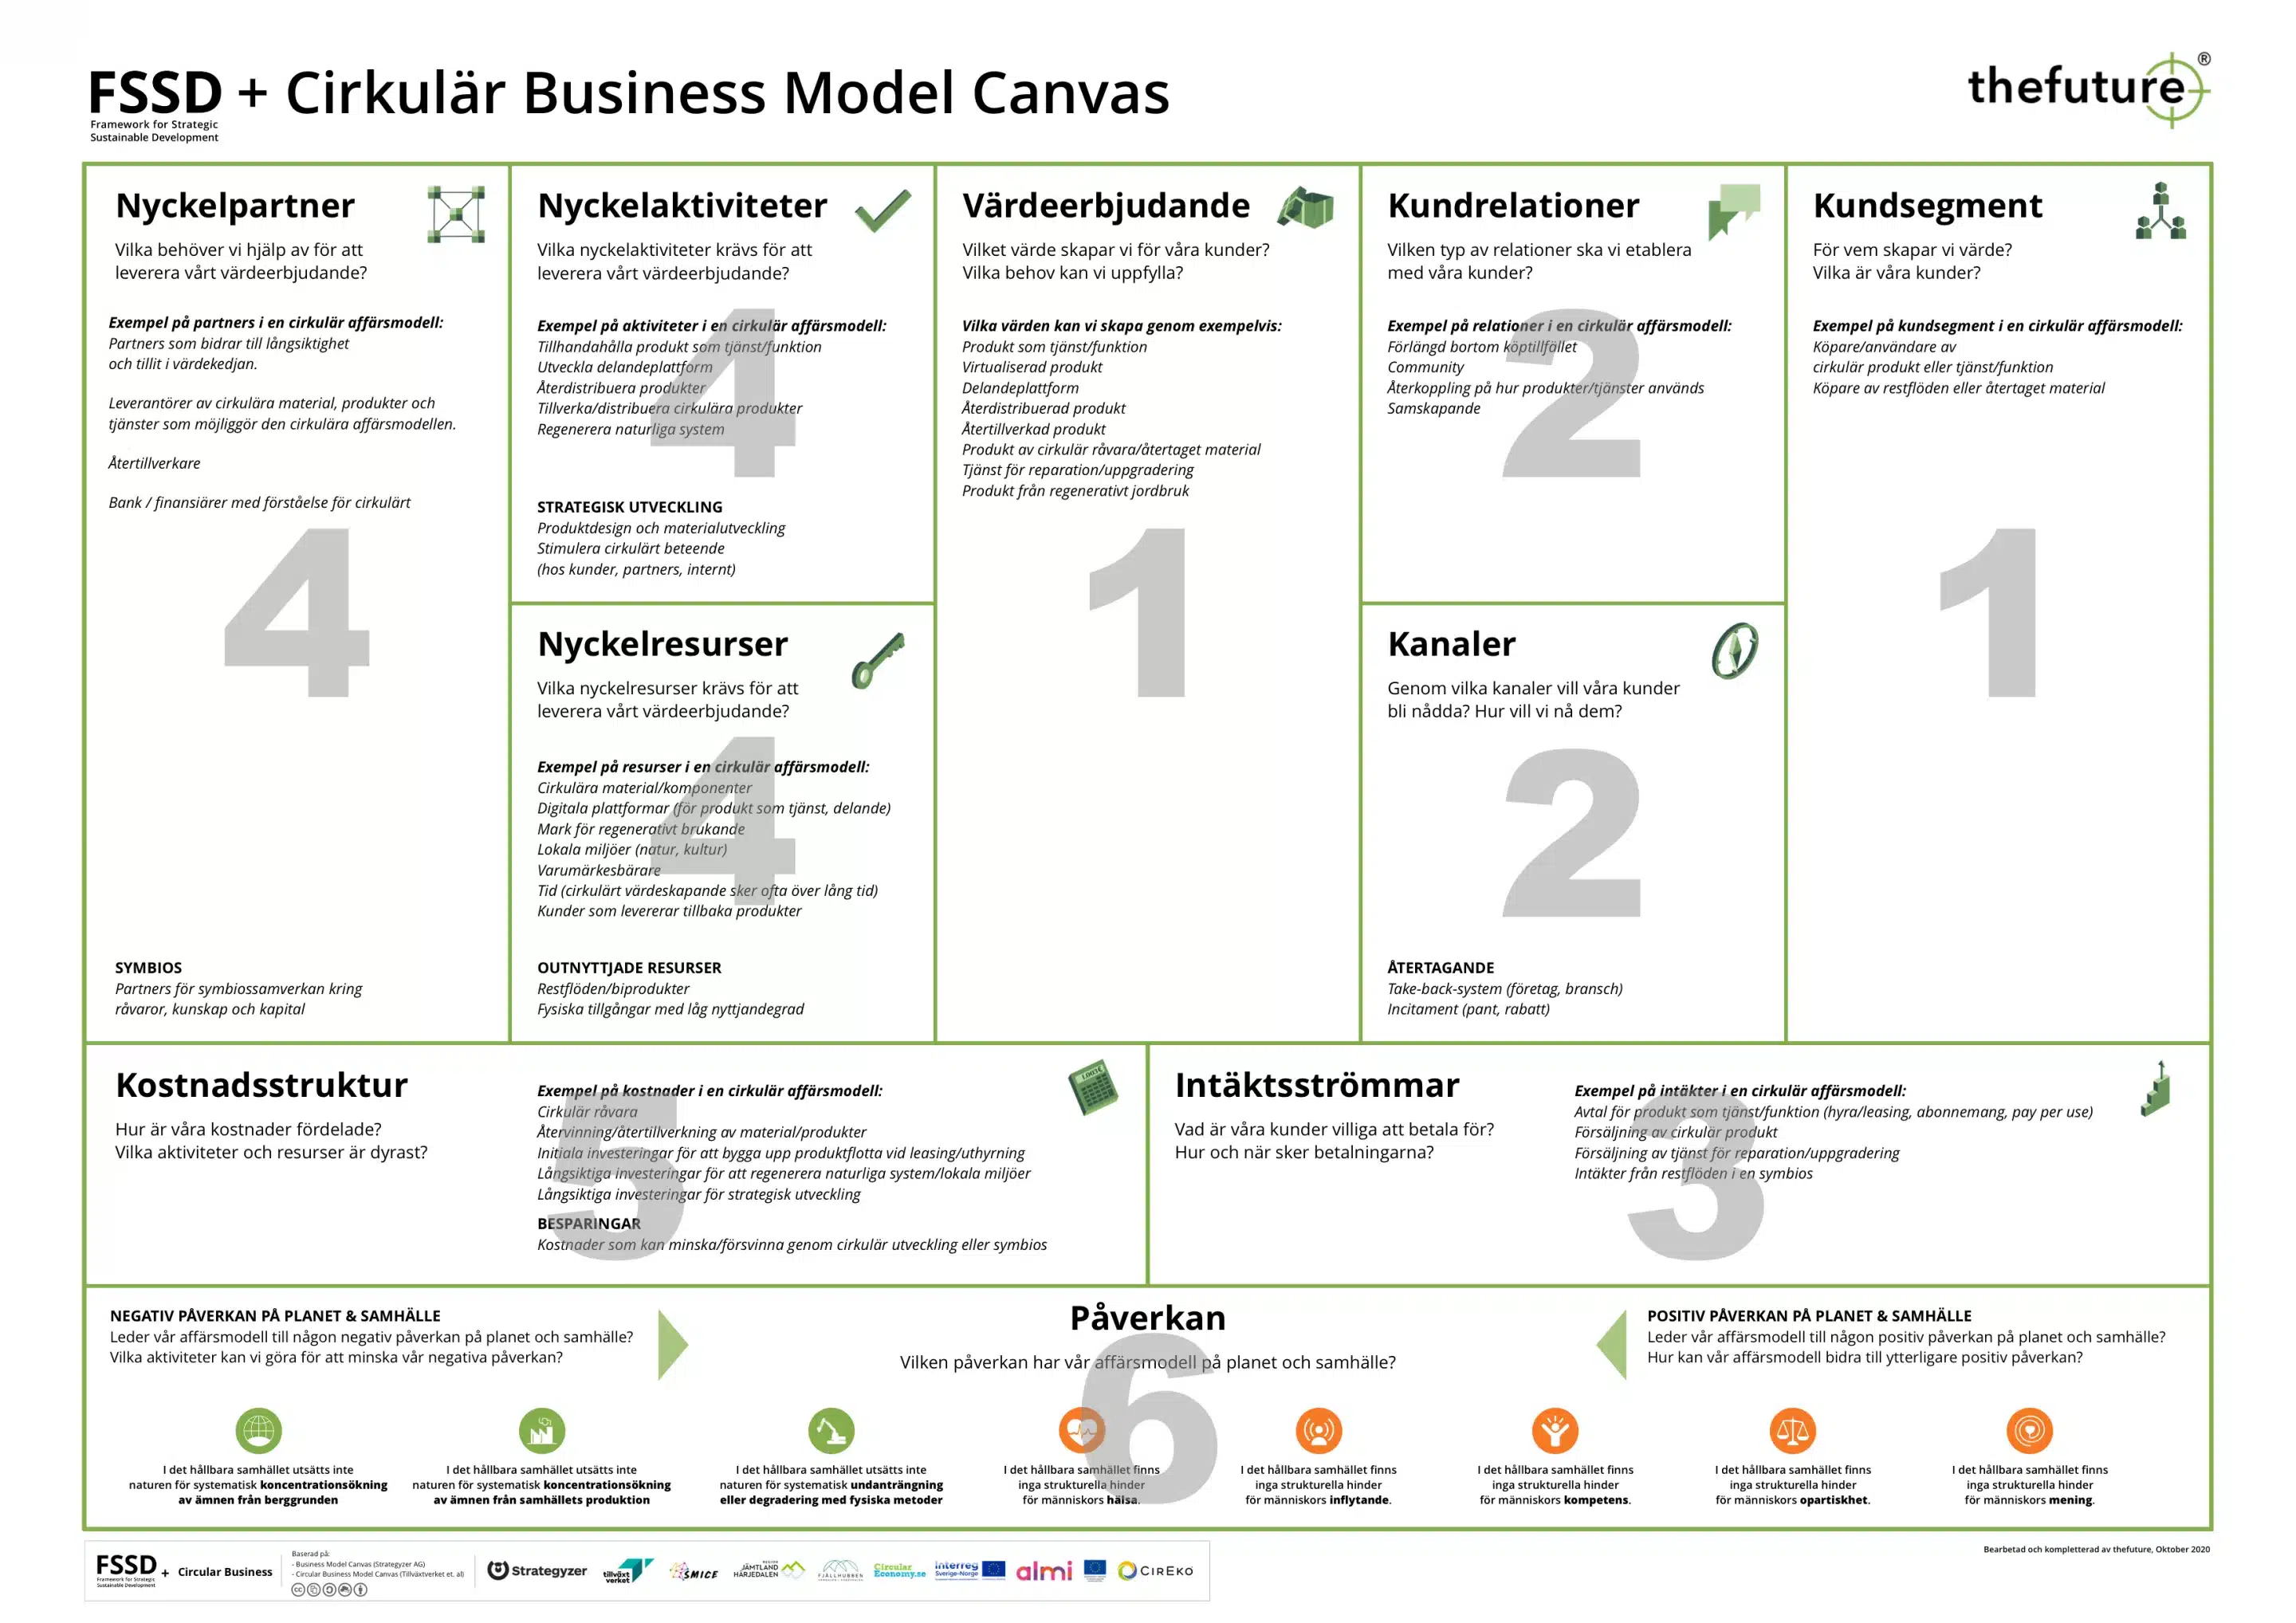 thefuture, FSSD+Circular Business Model Canvas 2.0, Ordningsföljd, thefuture (A4)